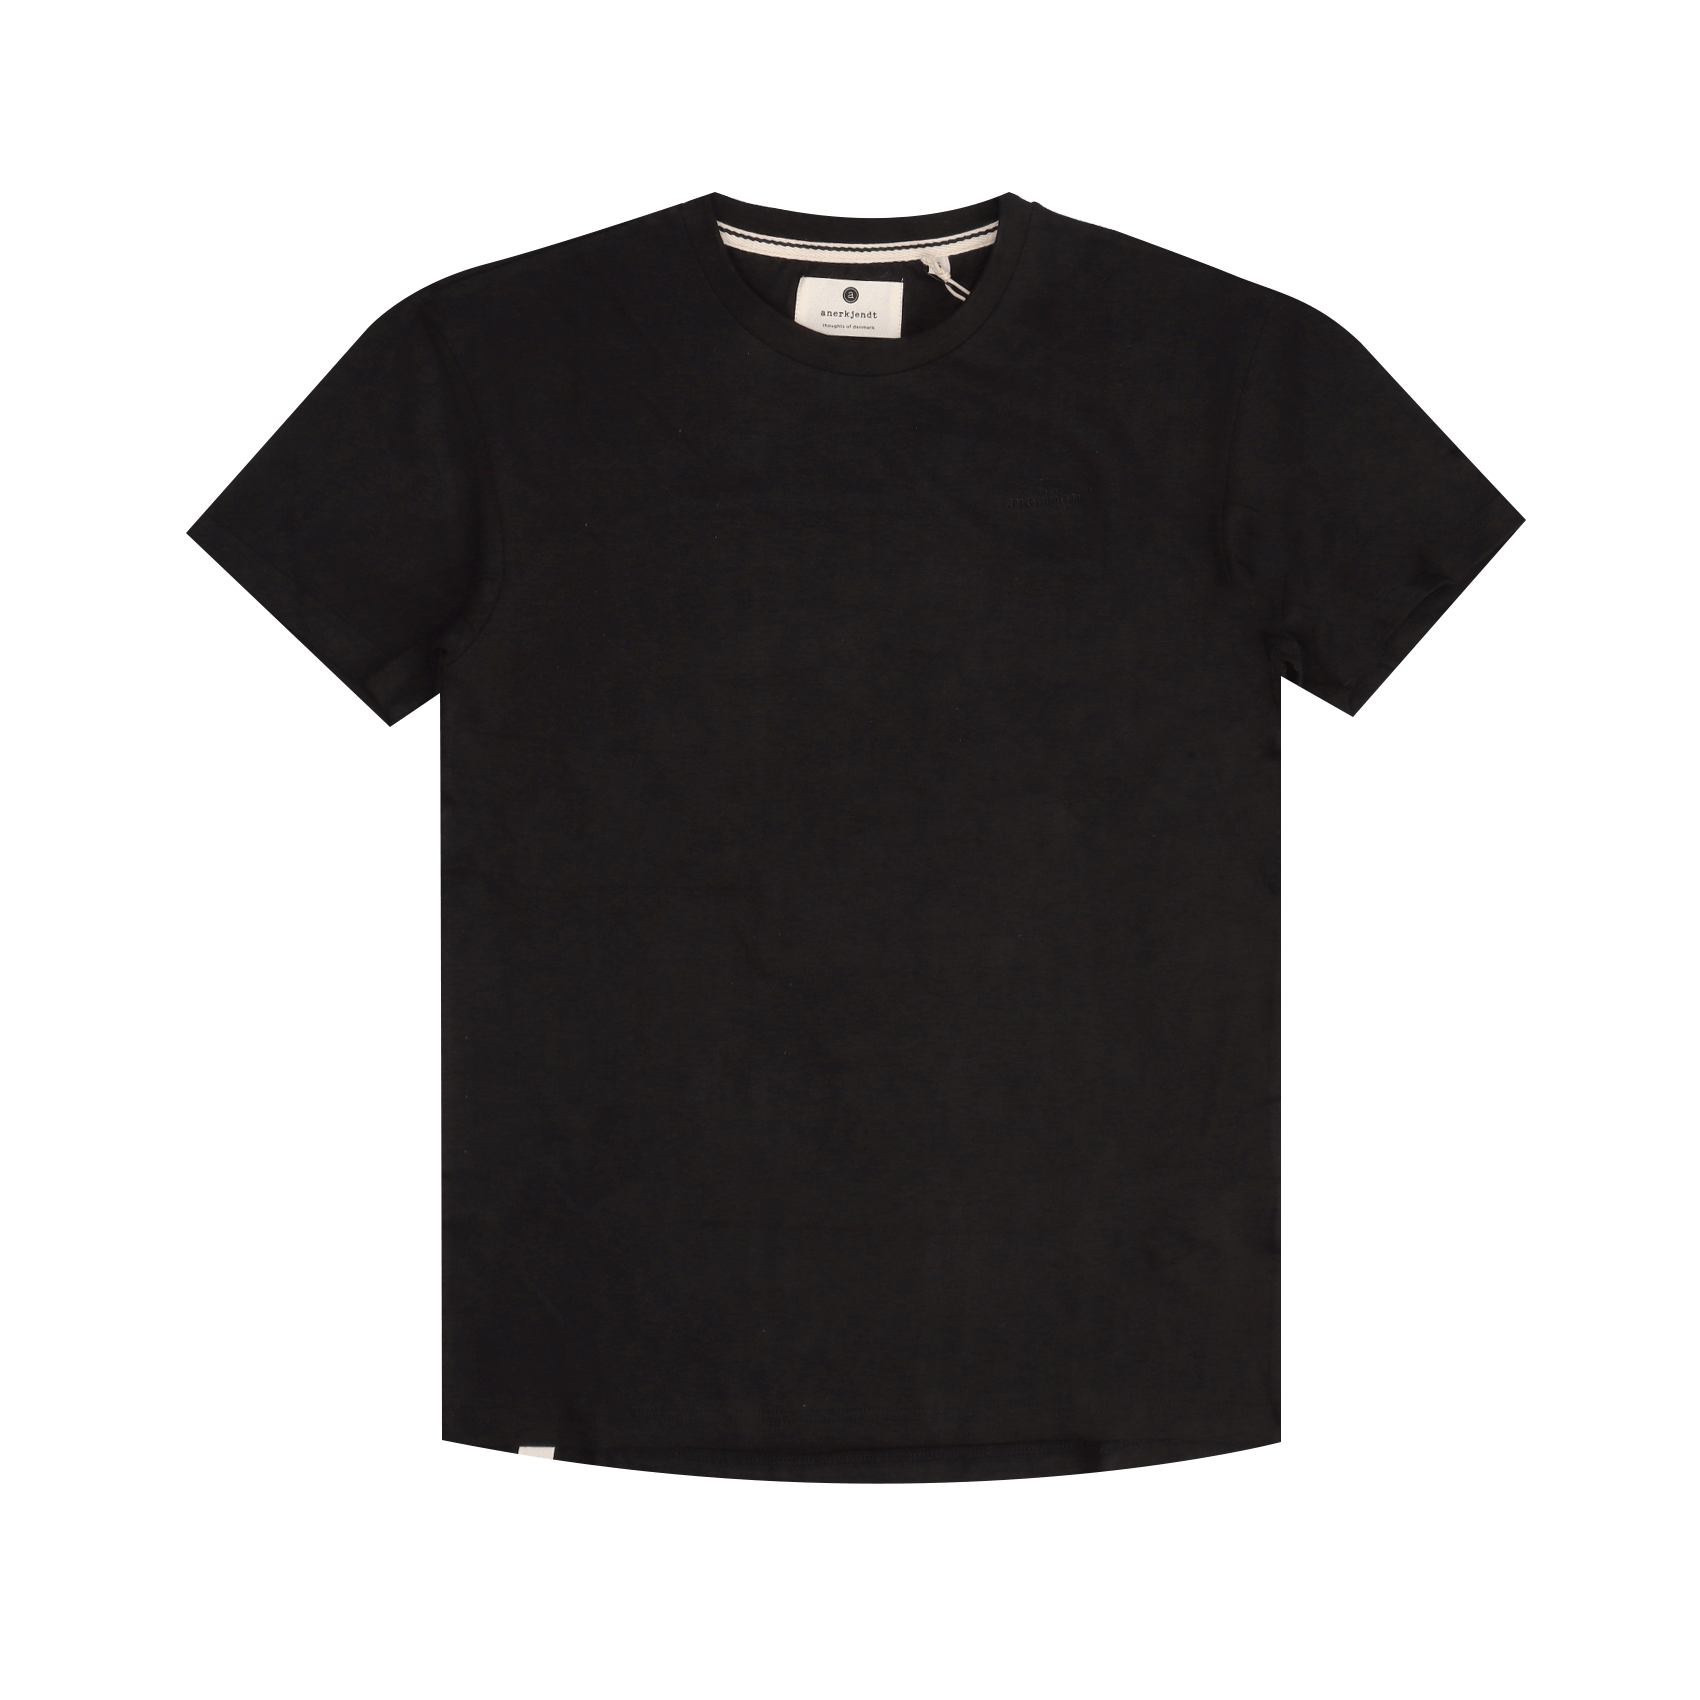 Akkikki T-shirt - Black.